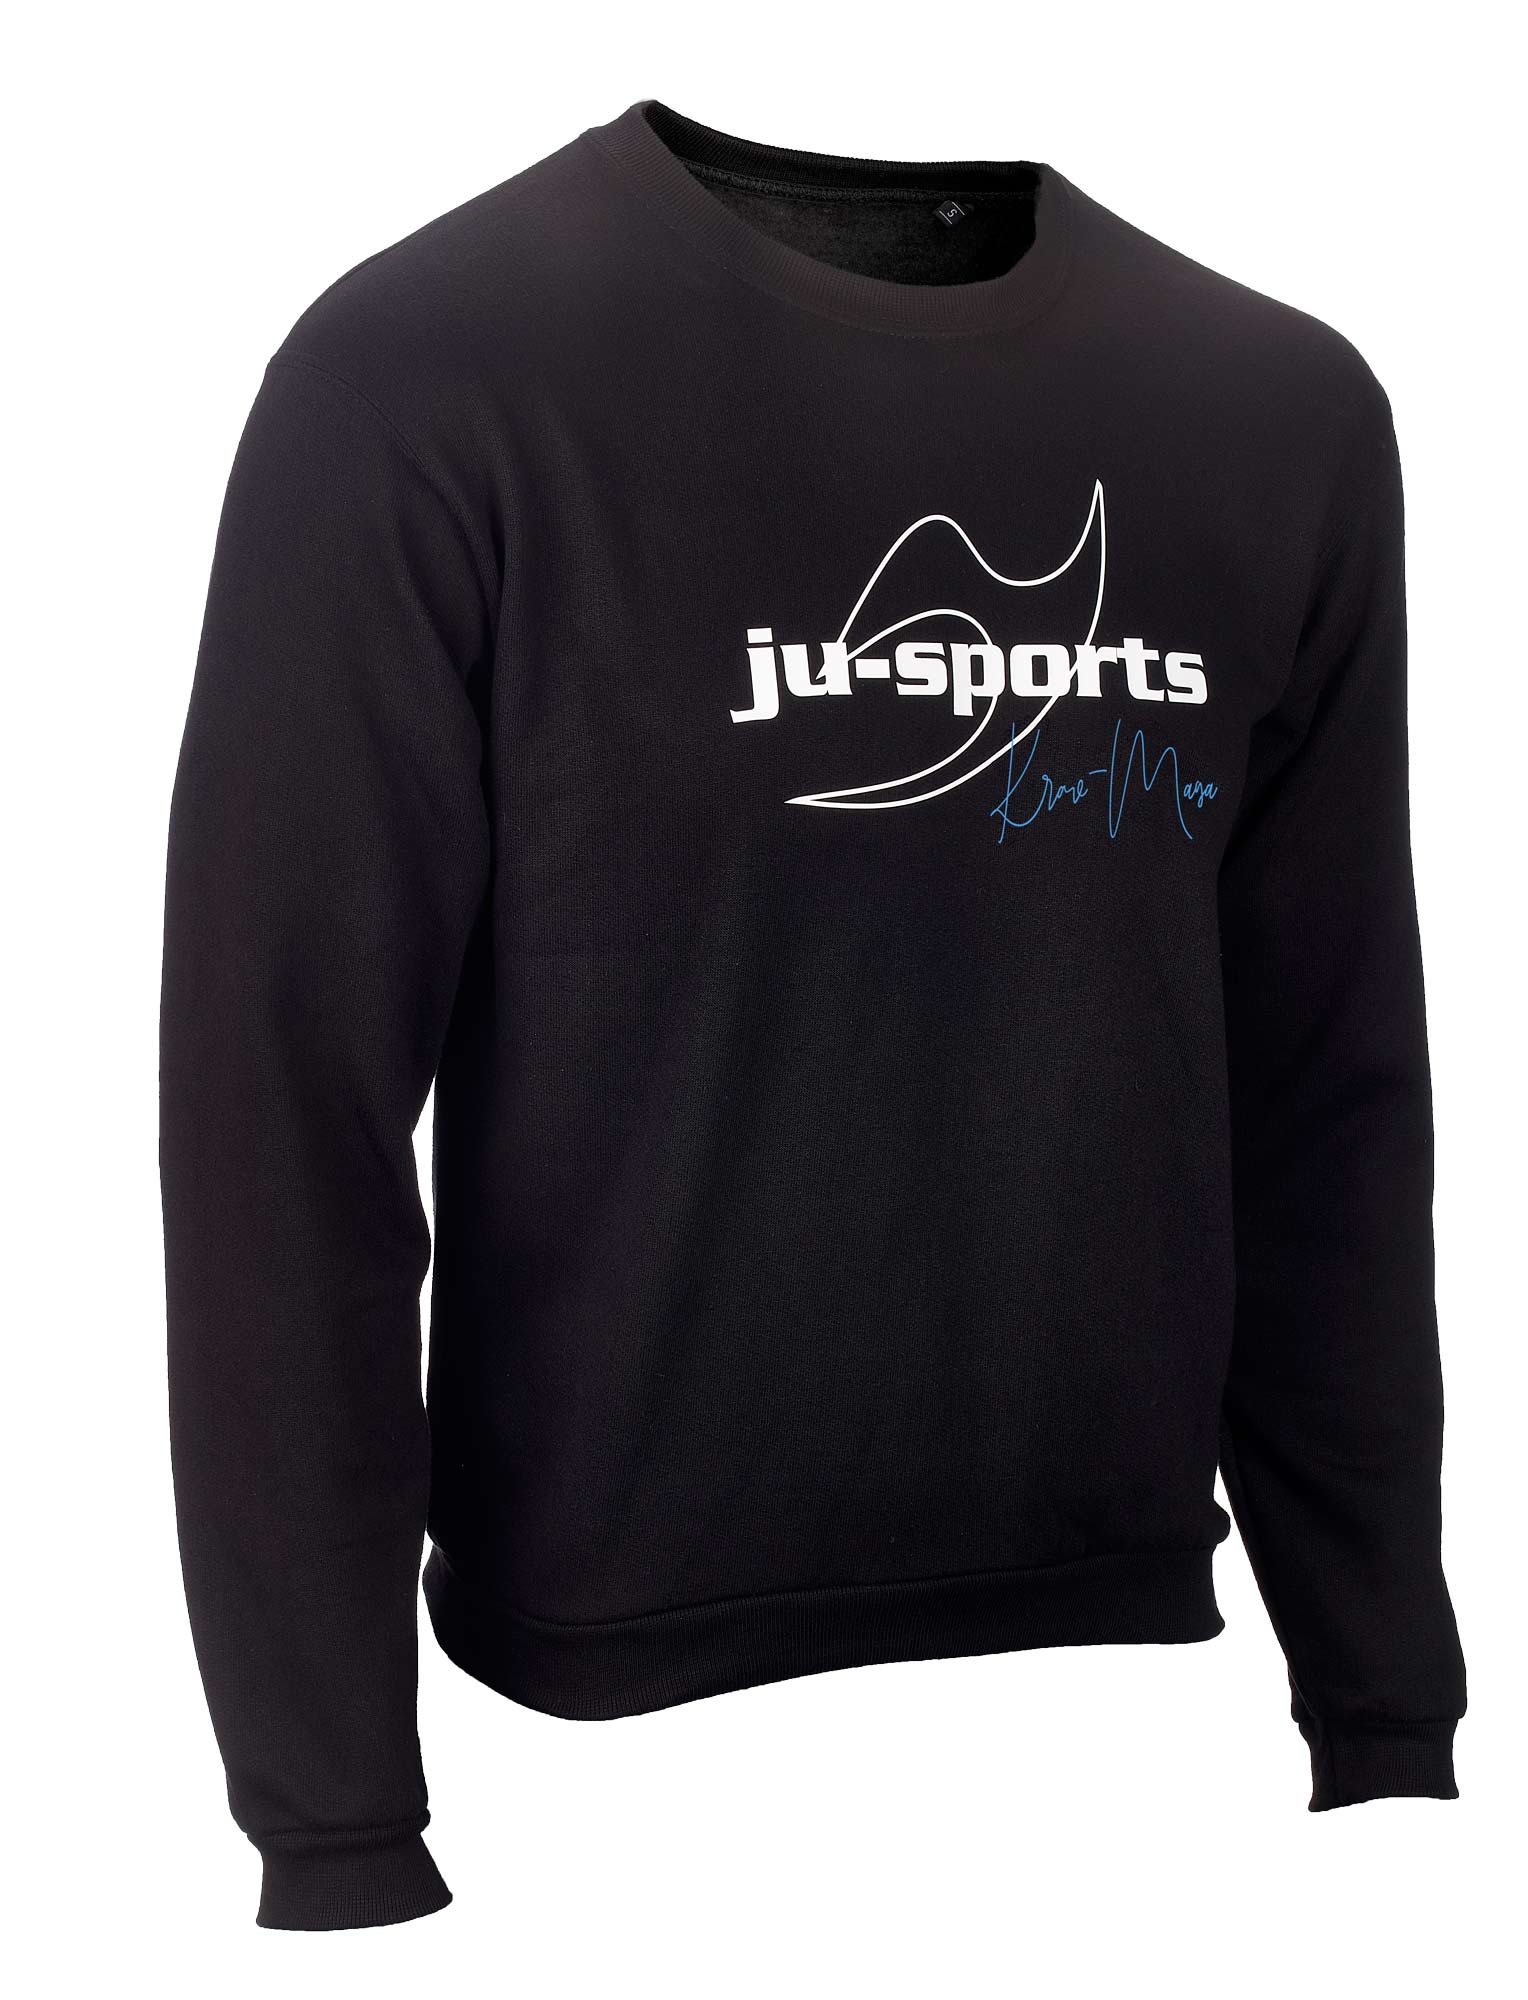 Ju-Sports Signature Line Sweater Krav Maga 